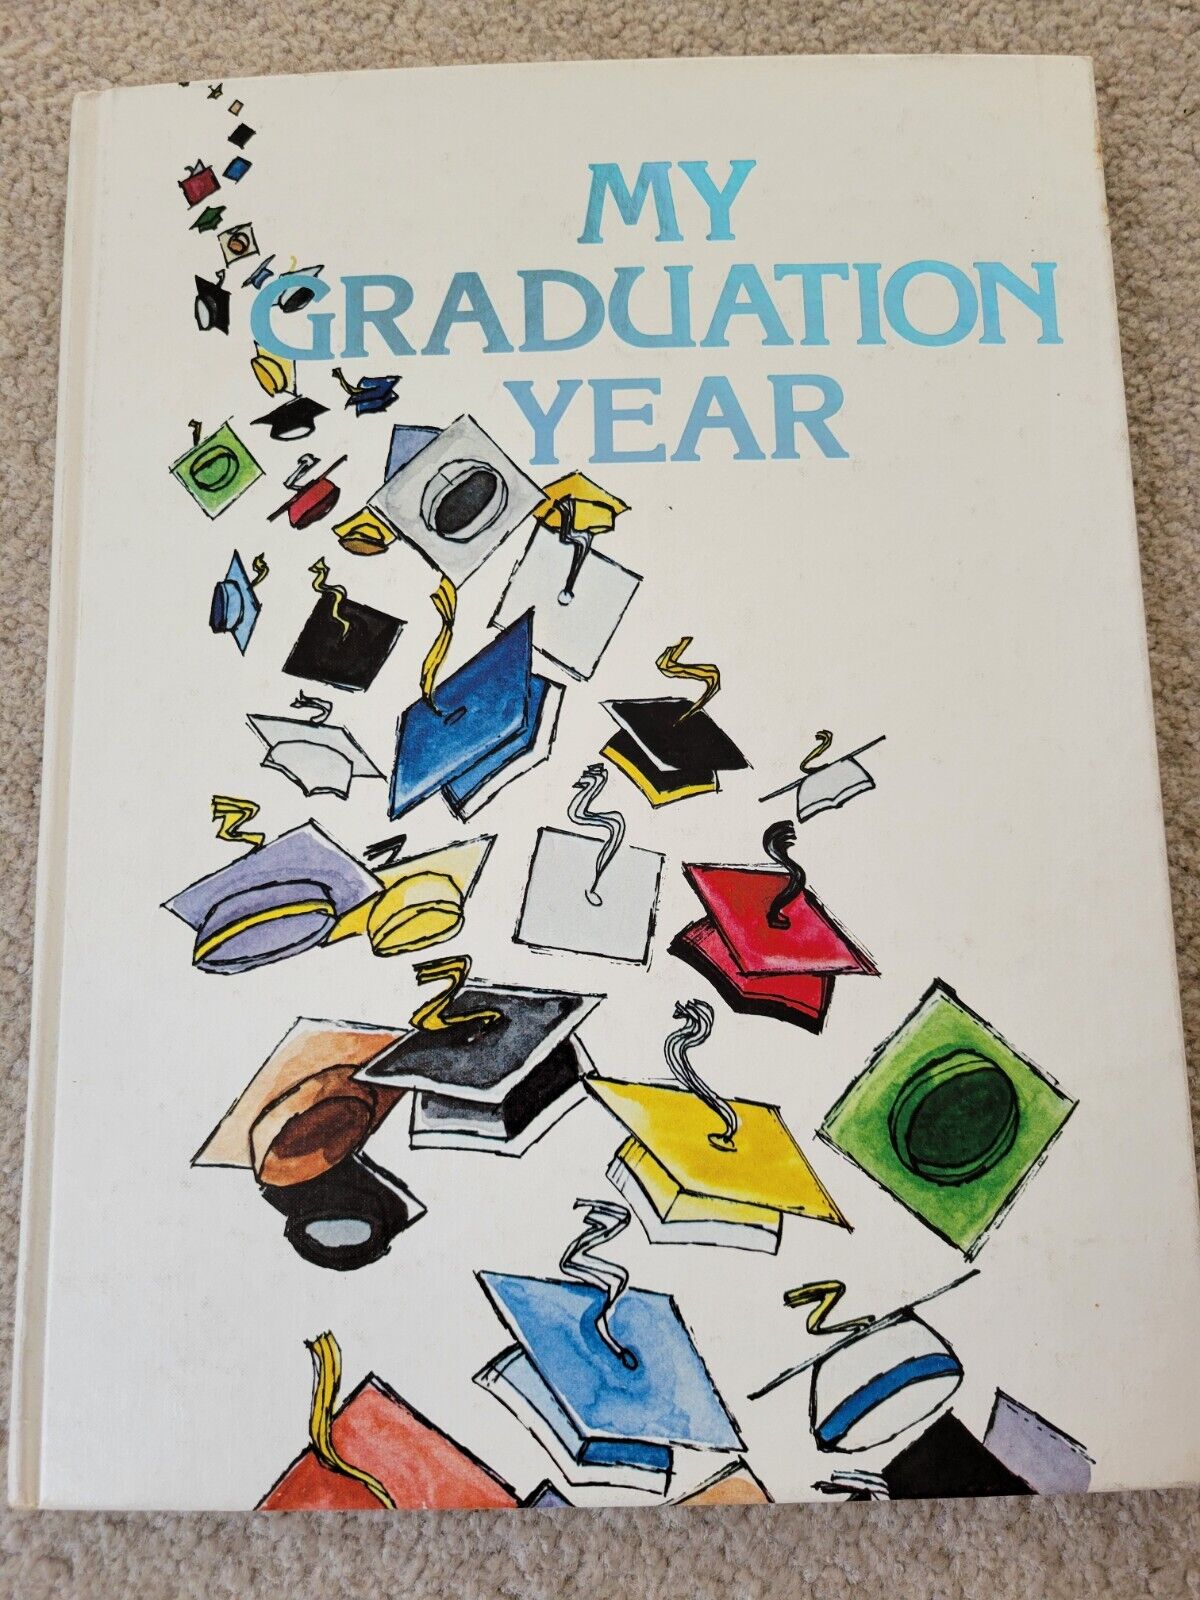 Vintage Christian Graduation Memory Journal